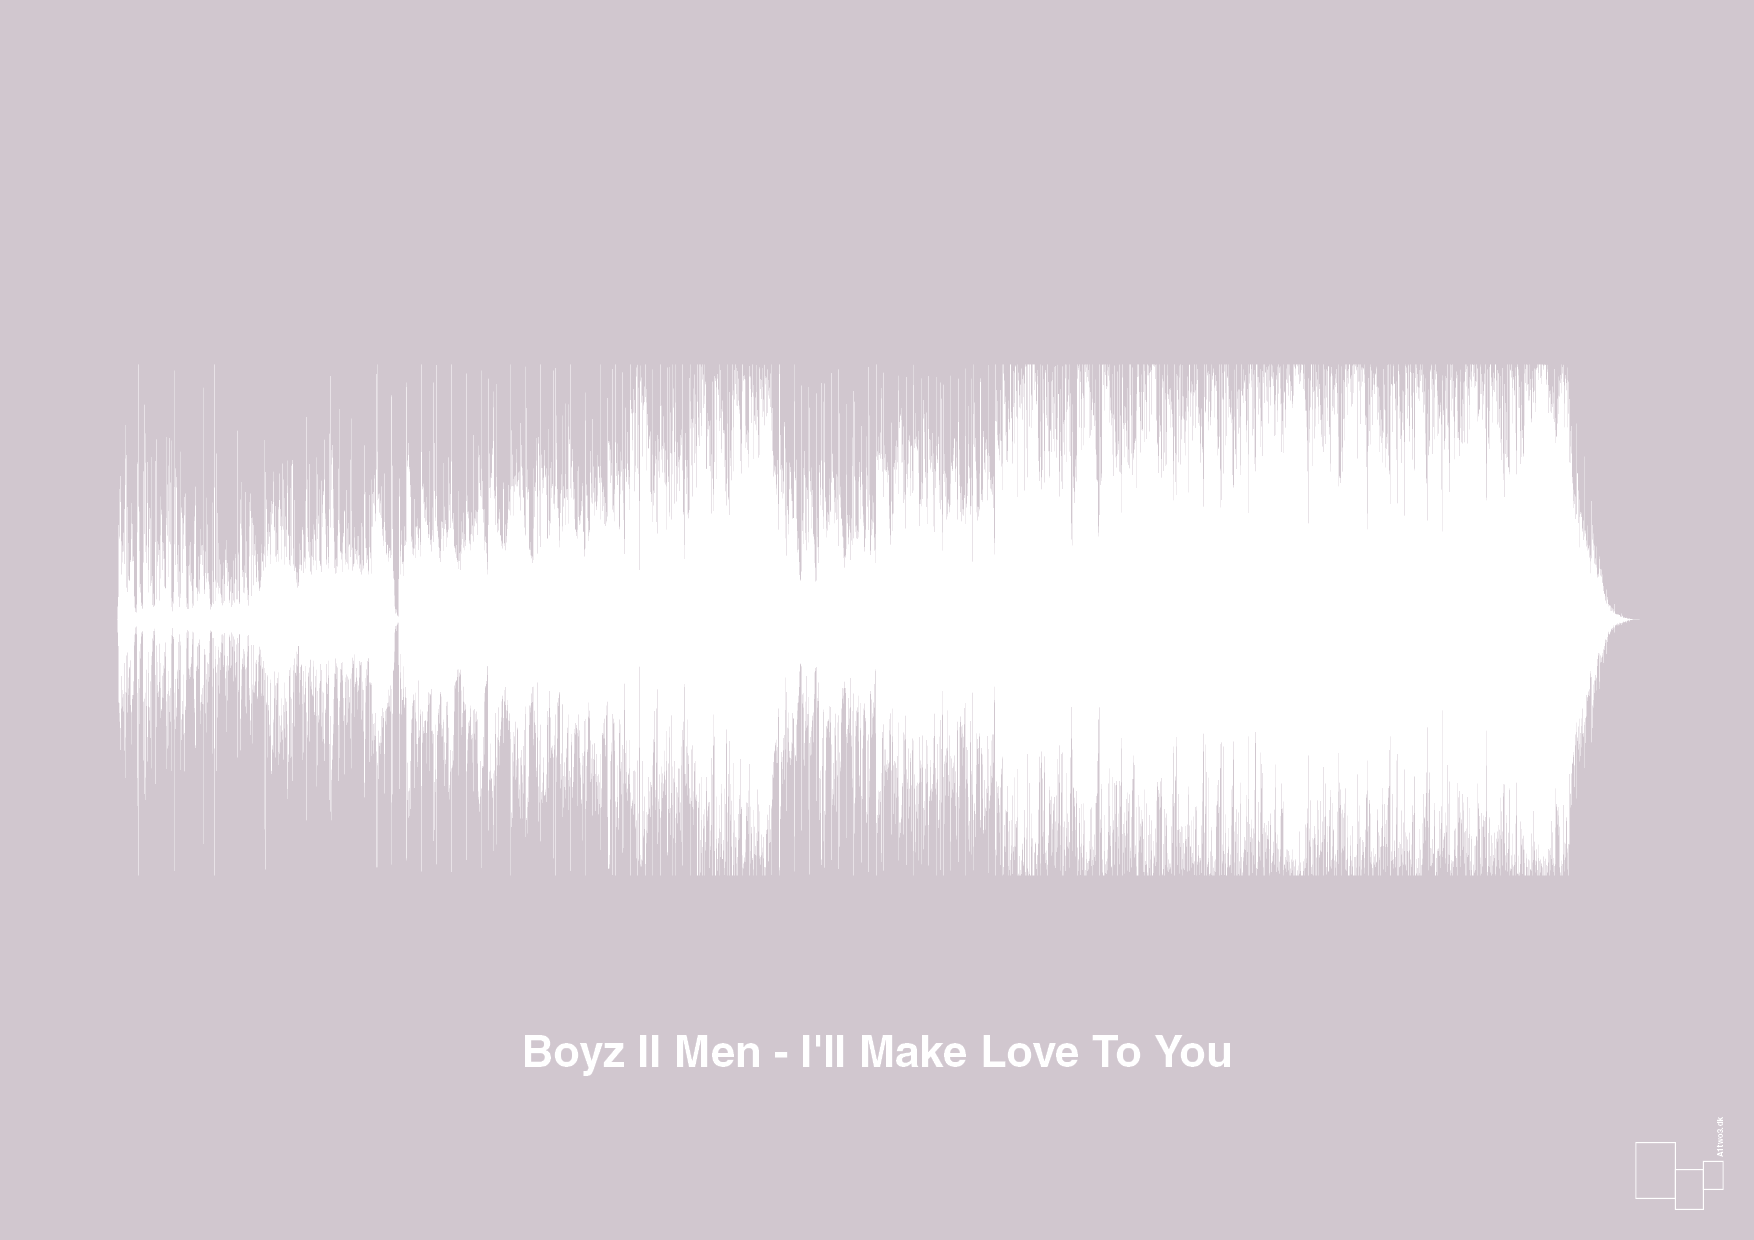 boyz II men - i'll make love to you - Plakat med Musik i Dusty Lilac